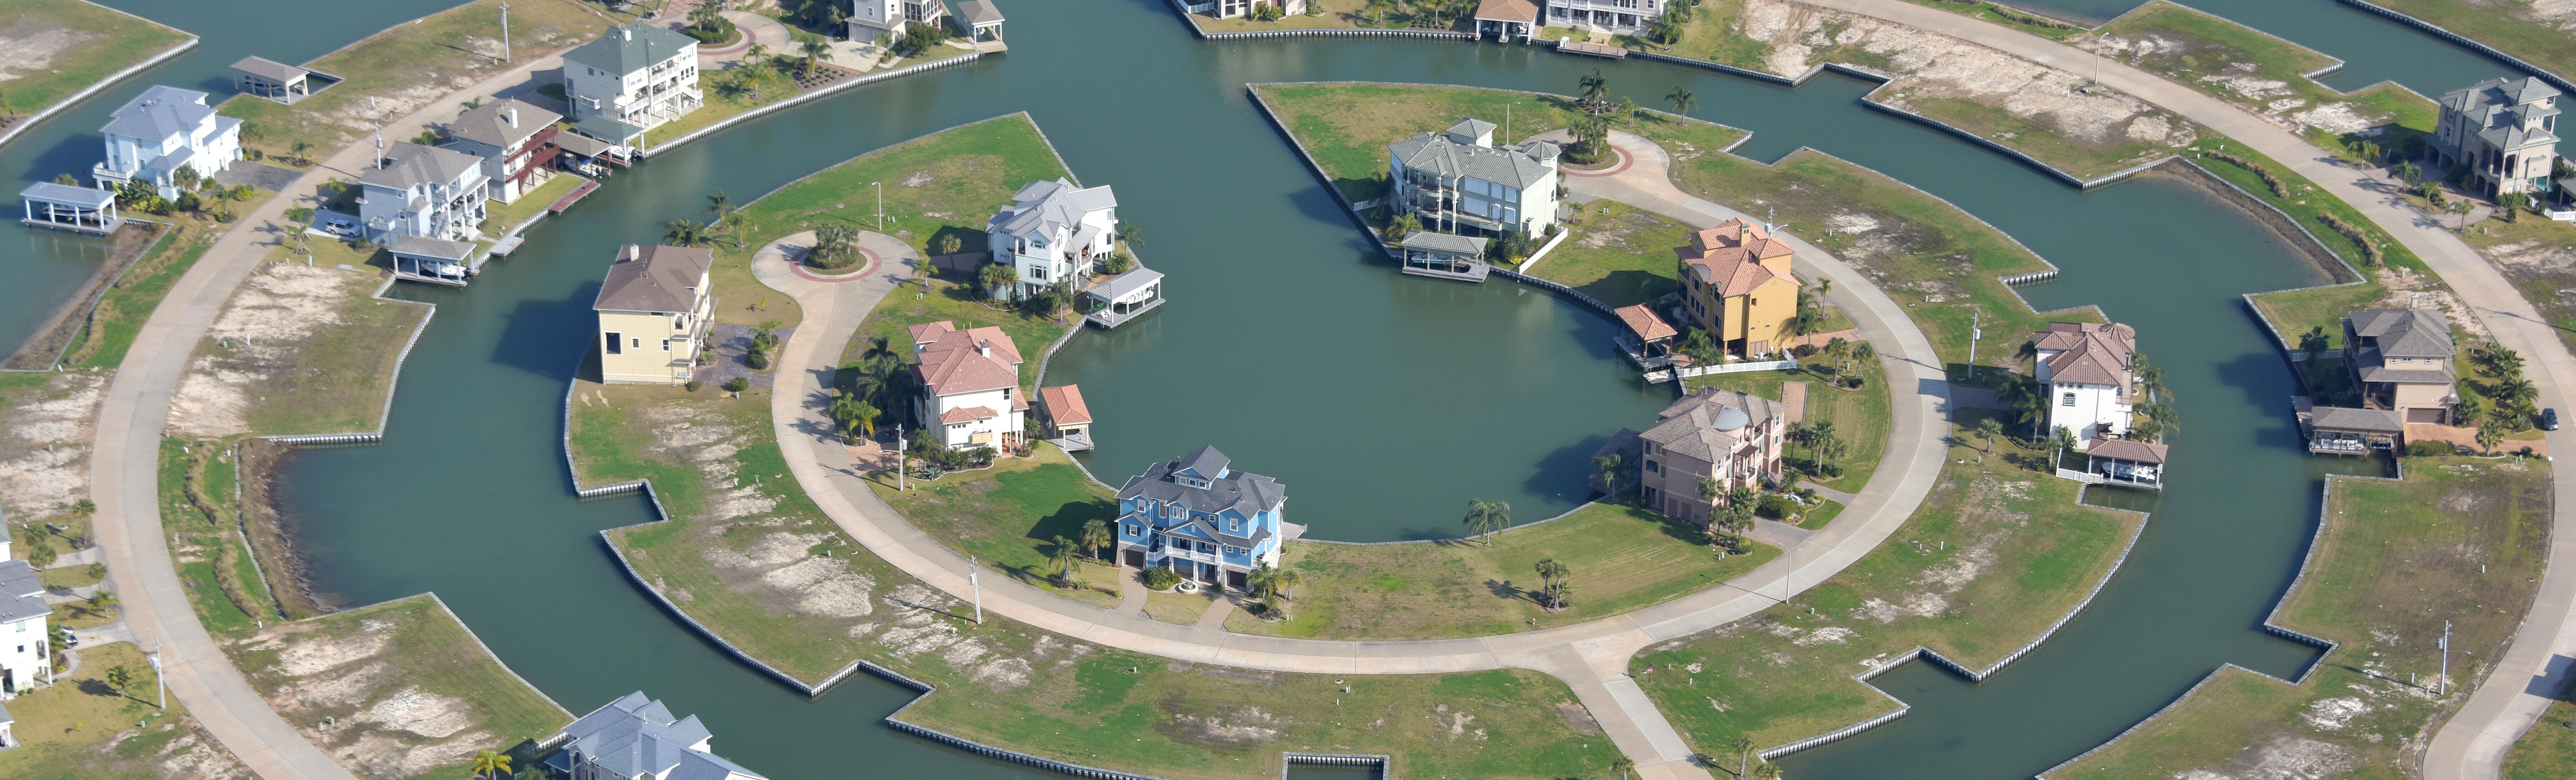 Texas Gulf Coast Property For Sale